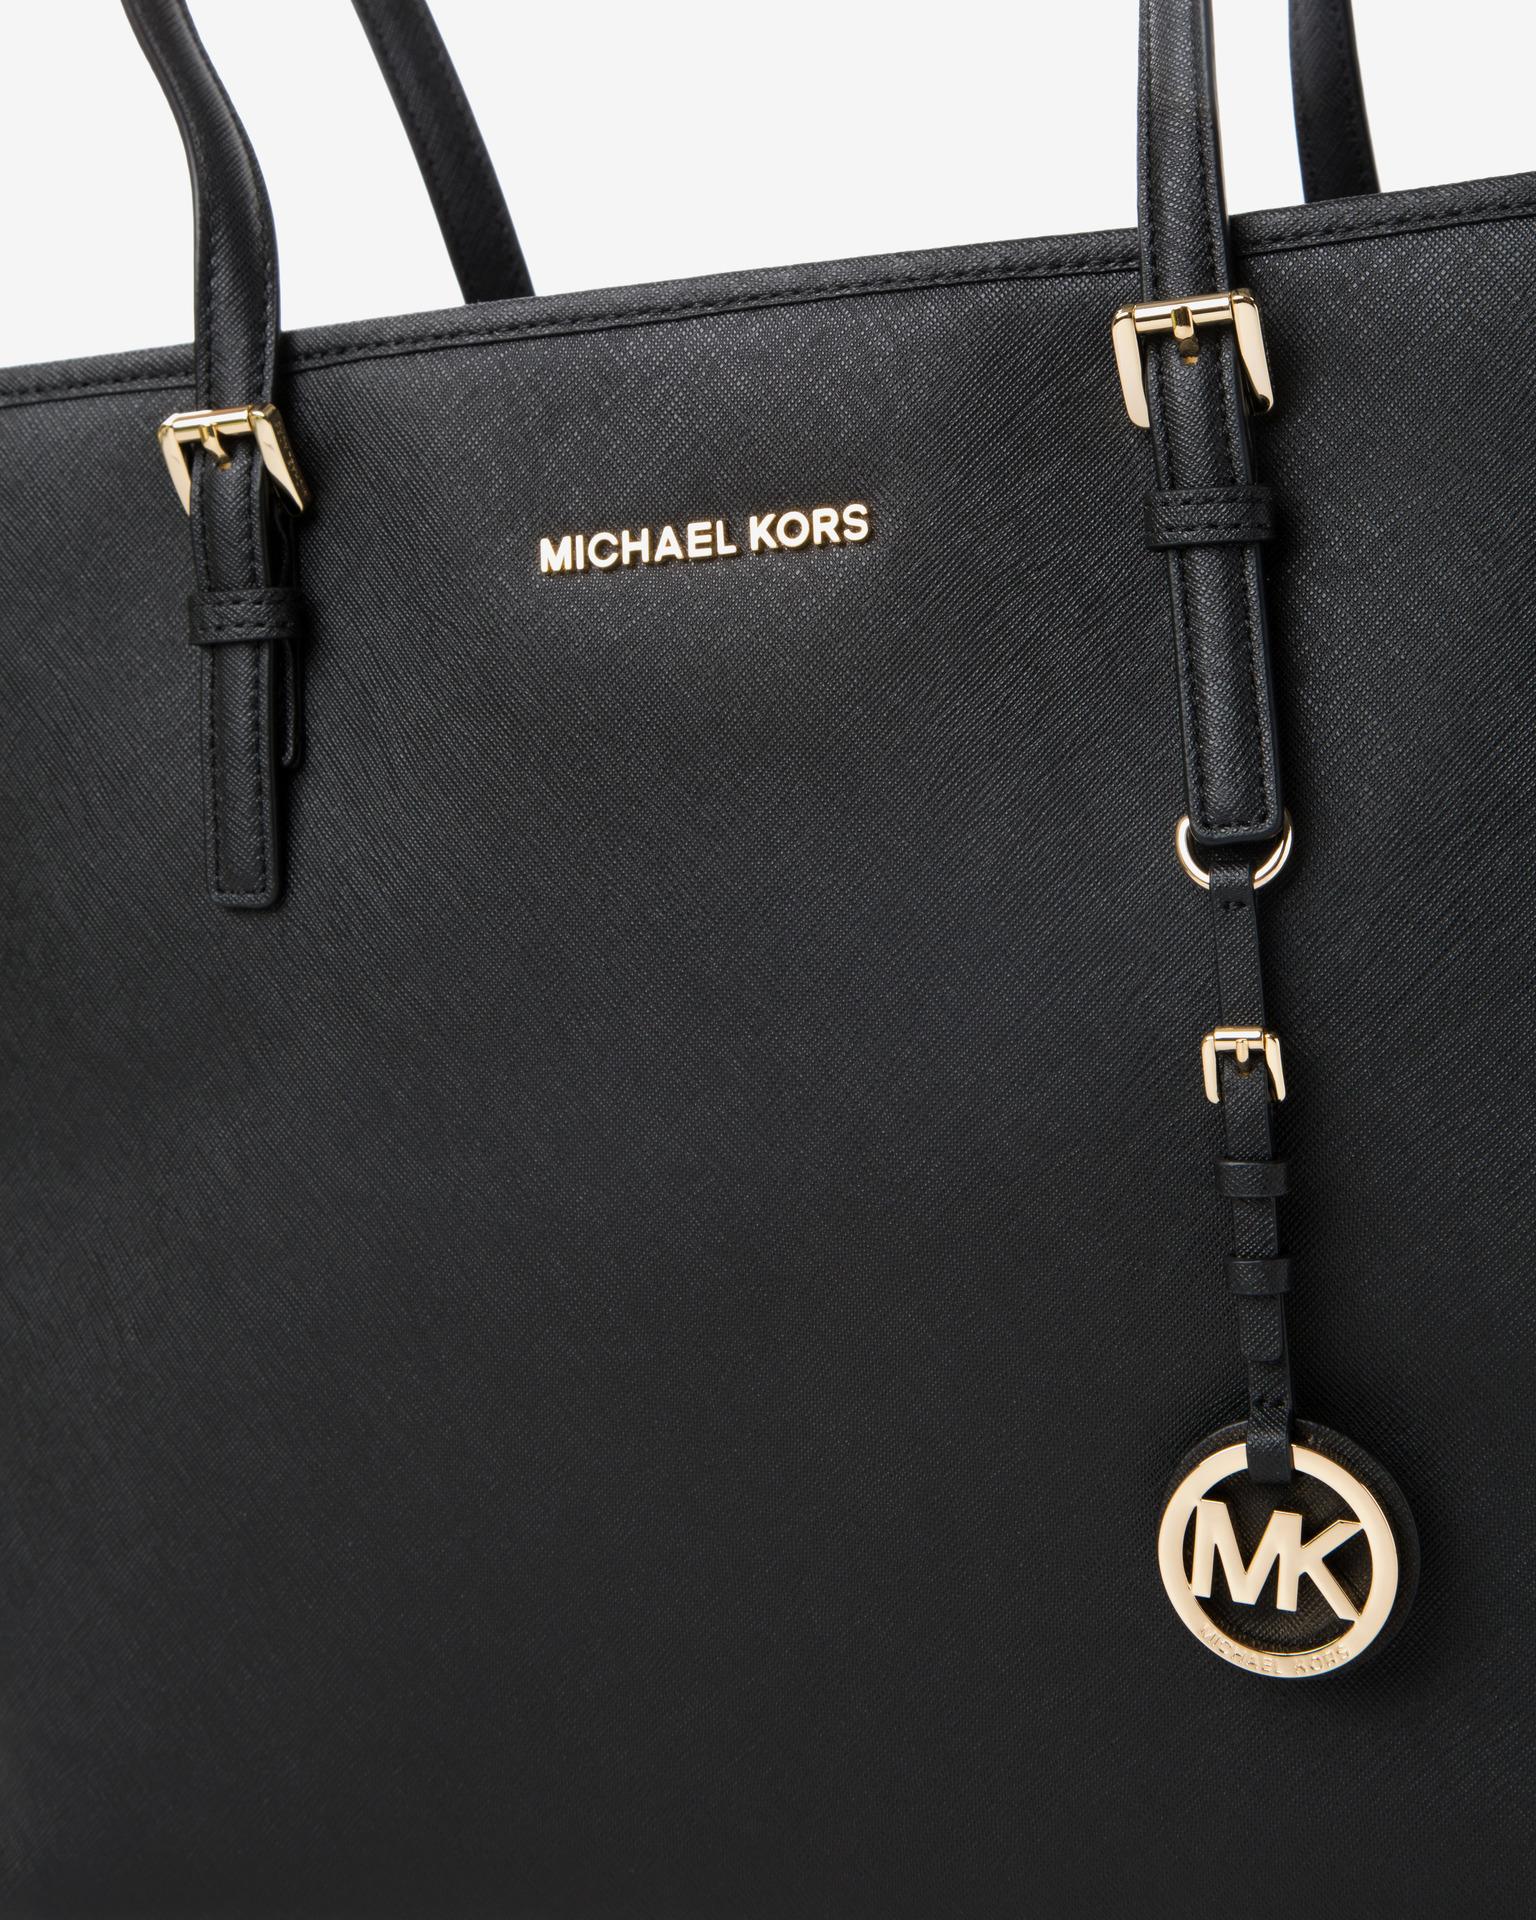 Michael Kors - Authenticated Jet Set Handbag - Leather Black for Women, Never Worn